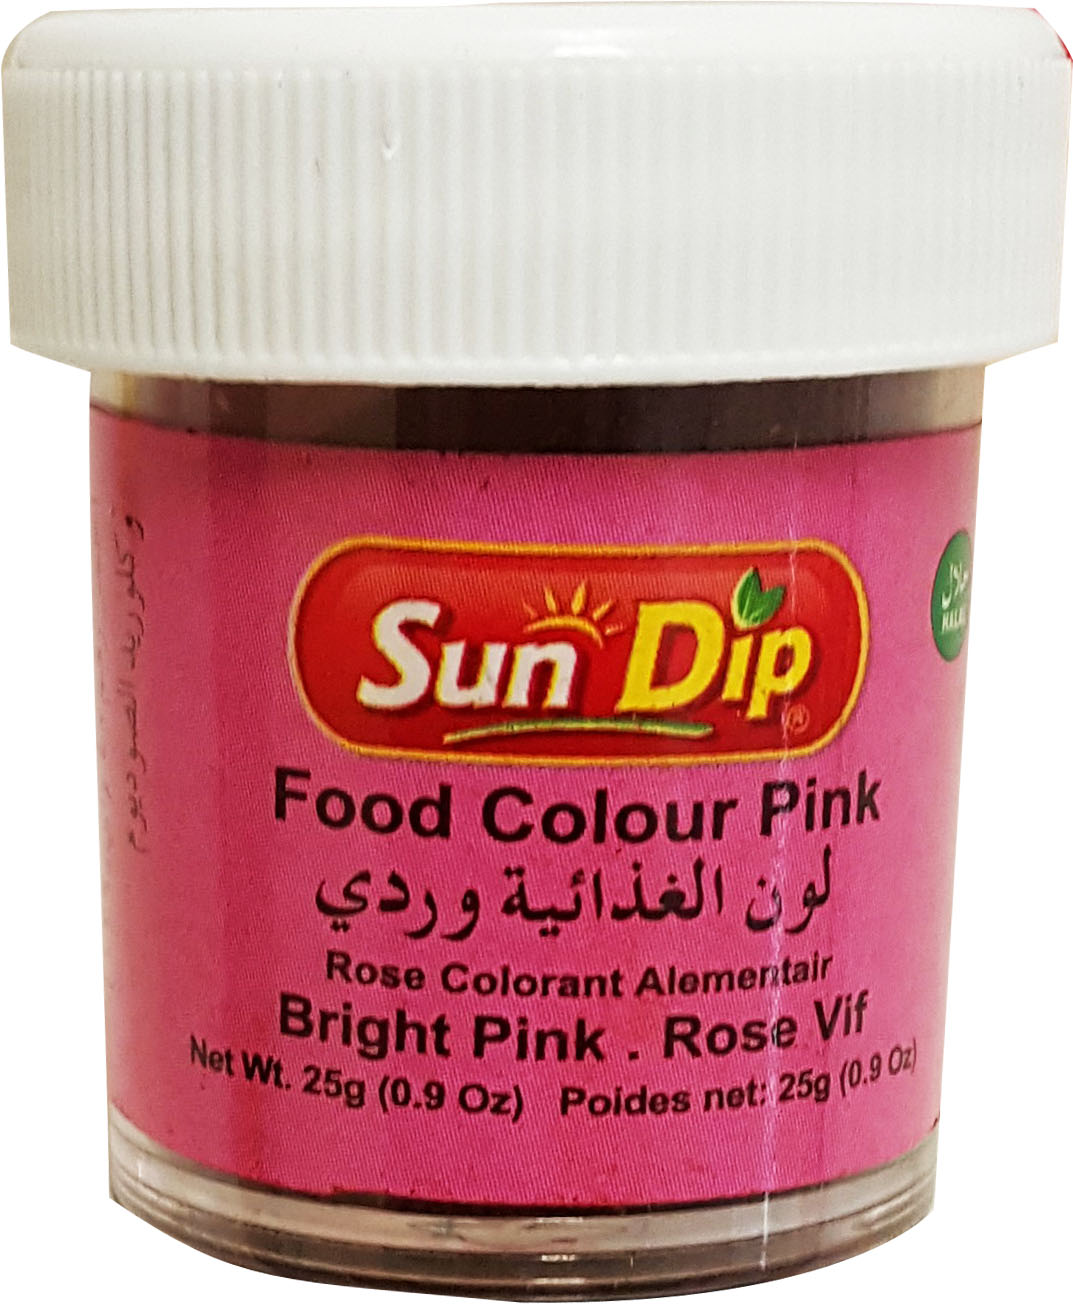 Sundip Food Colour Pink - Click Image to Close